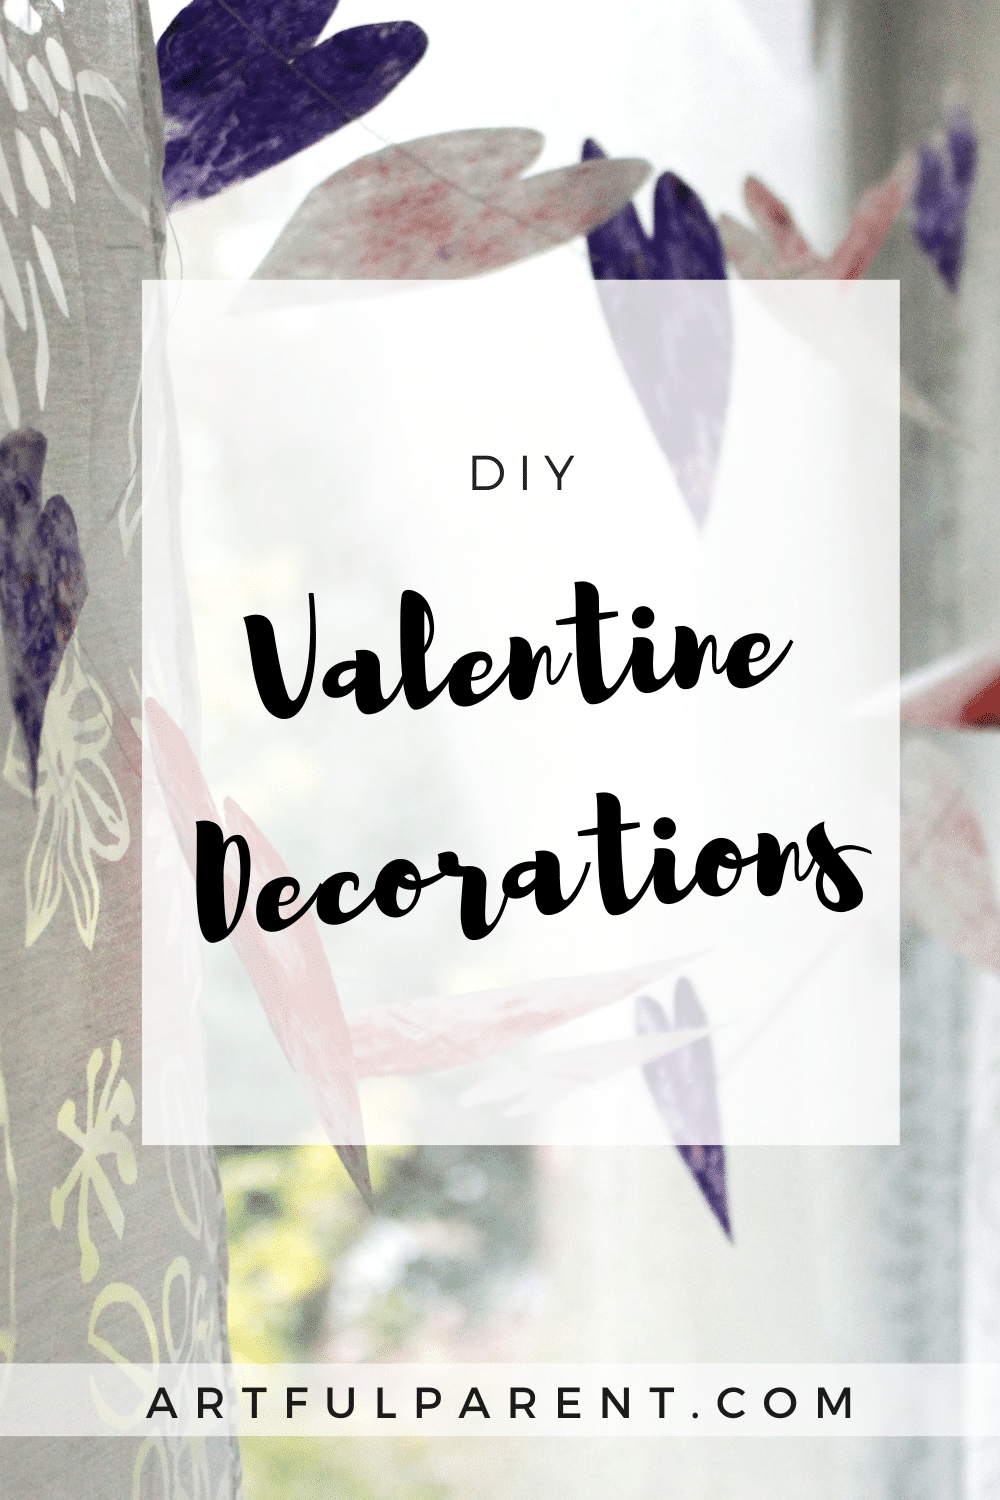 DIY Valentine Decorations: Melted Crayon Hearts Garland